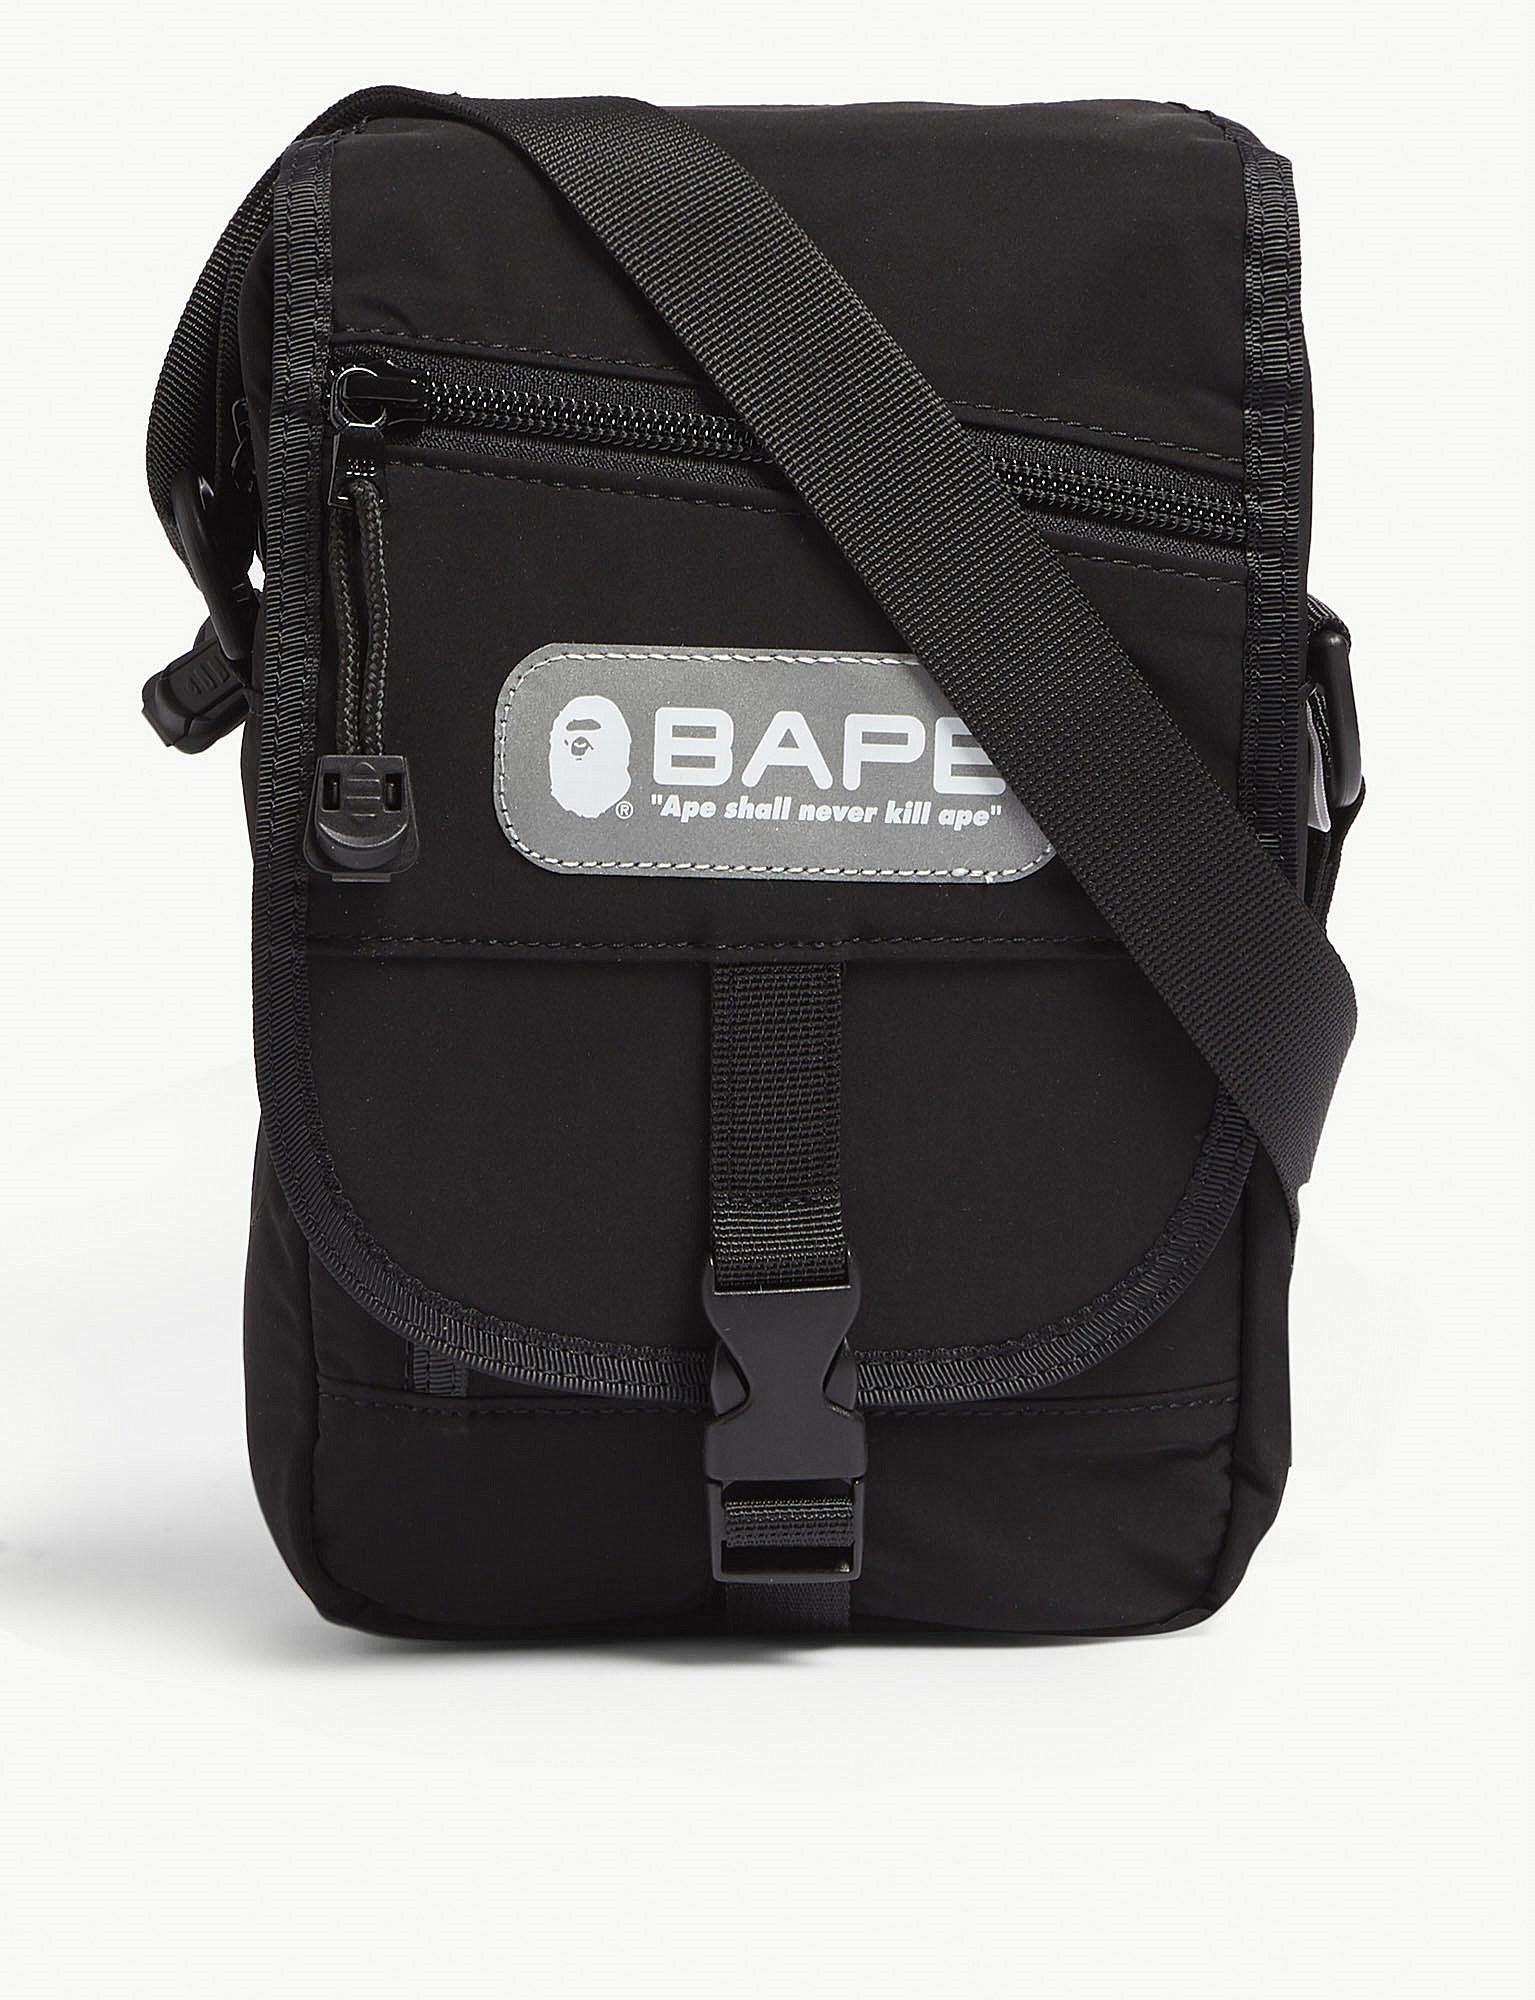 bape shoulder bag